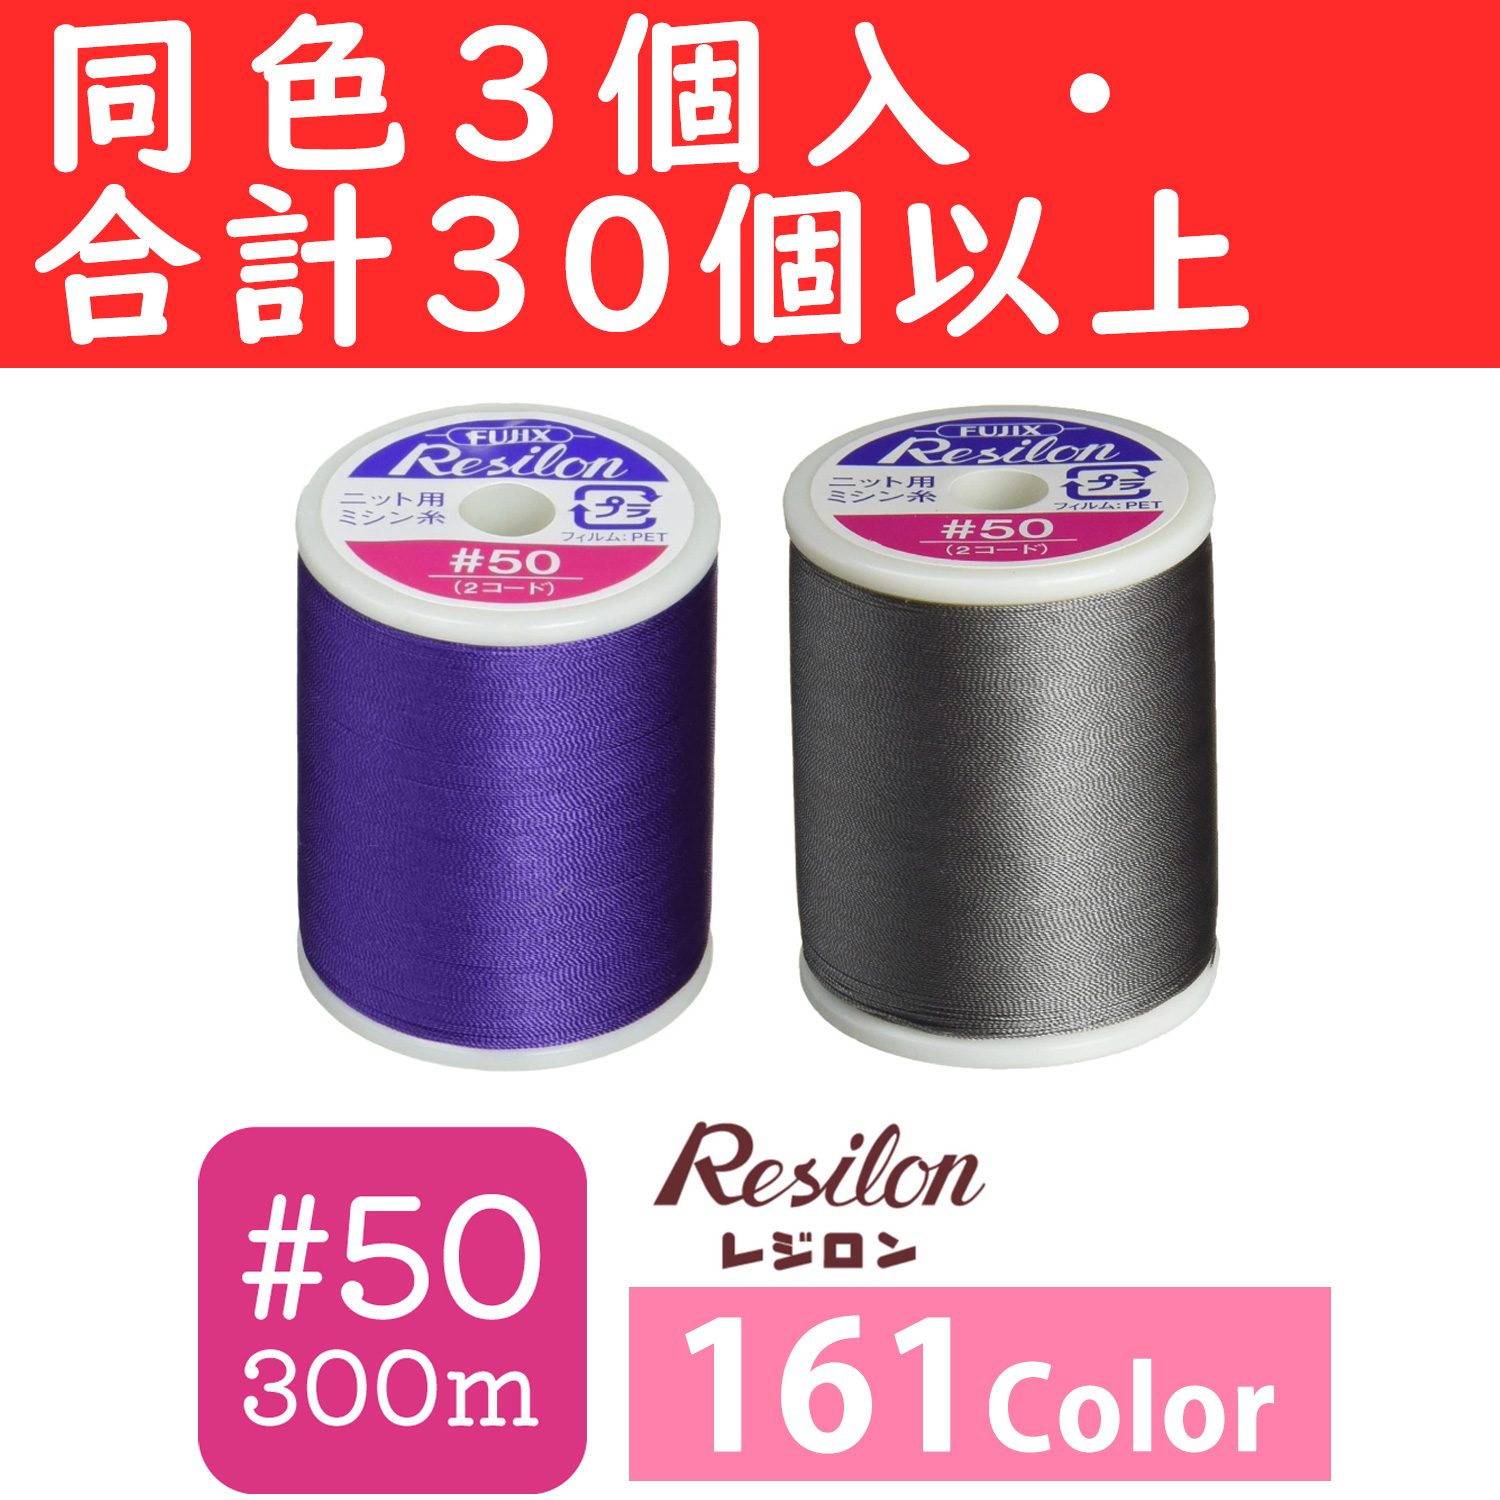 ■FK80-OVER30 Resilon Knit Machine Thread #50/300m, Same color 3 pcs set, 30 pcs or more (pcs)